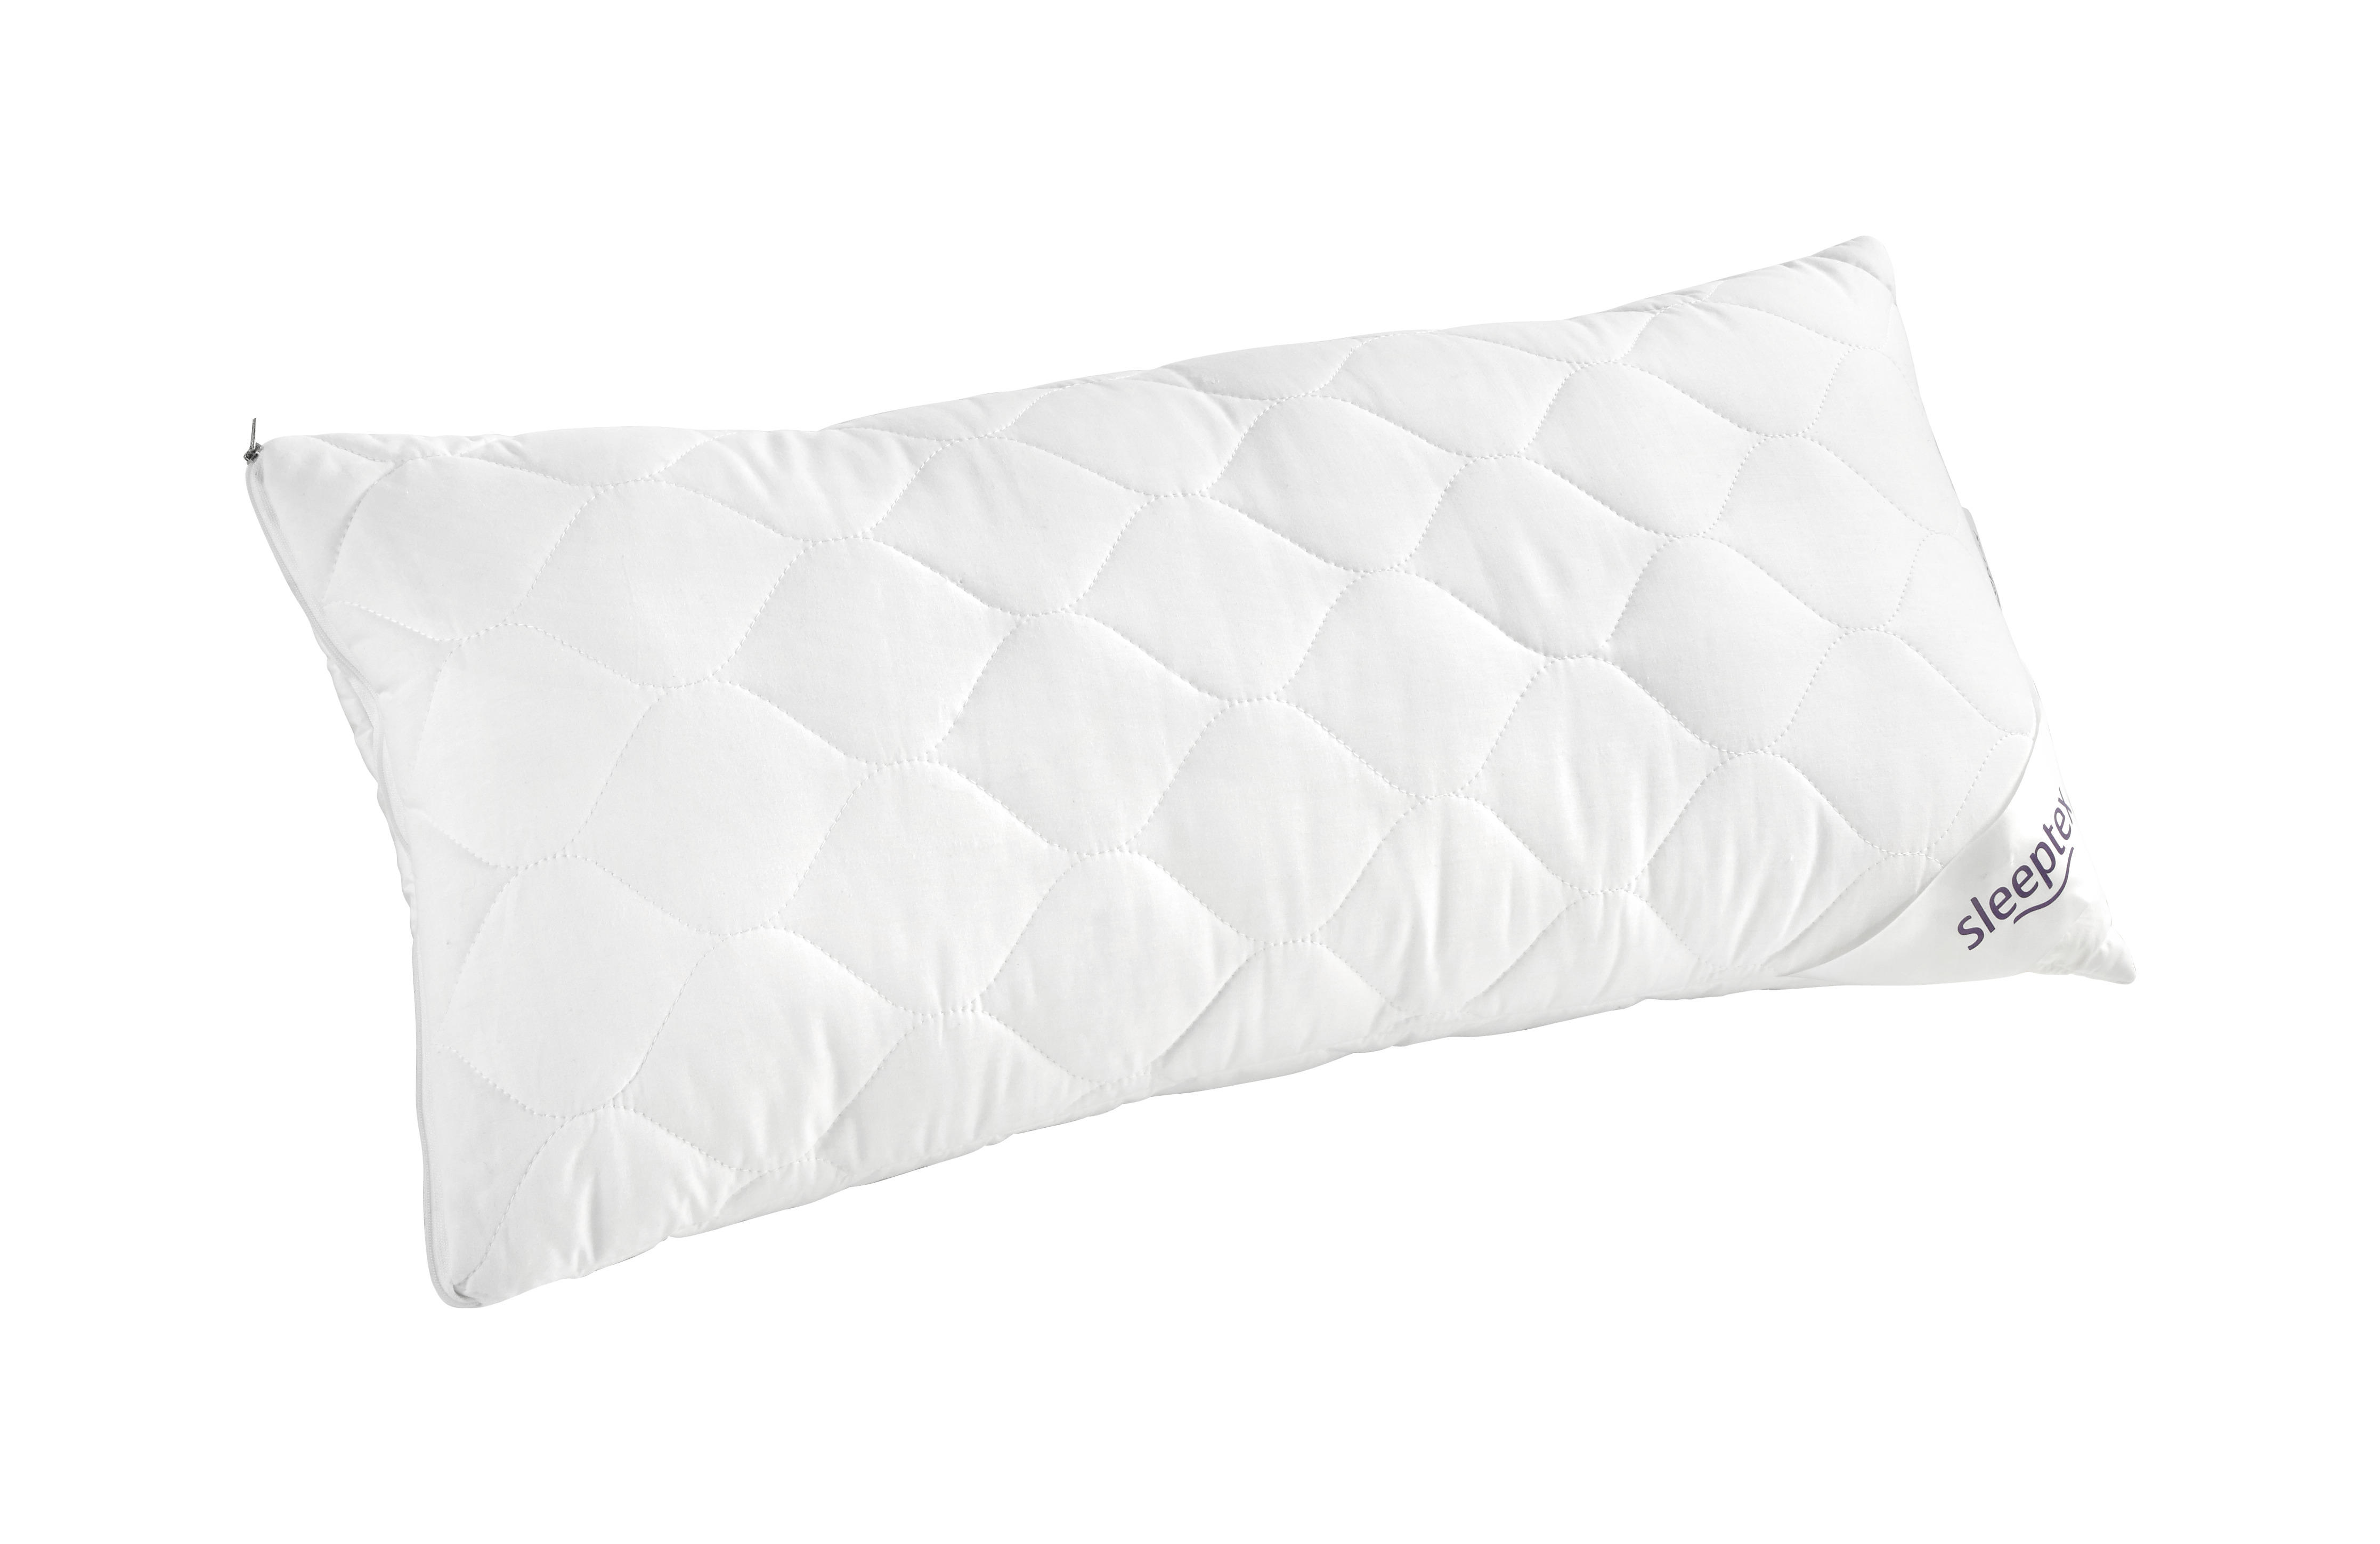 KOPFPOLSTER 40/80 cm   - Weiß, Basics, Textil (40/80cm) - Sleeptex